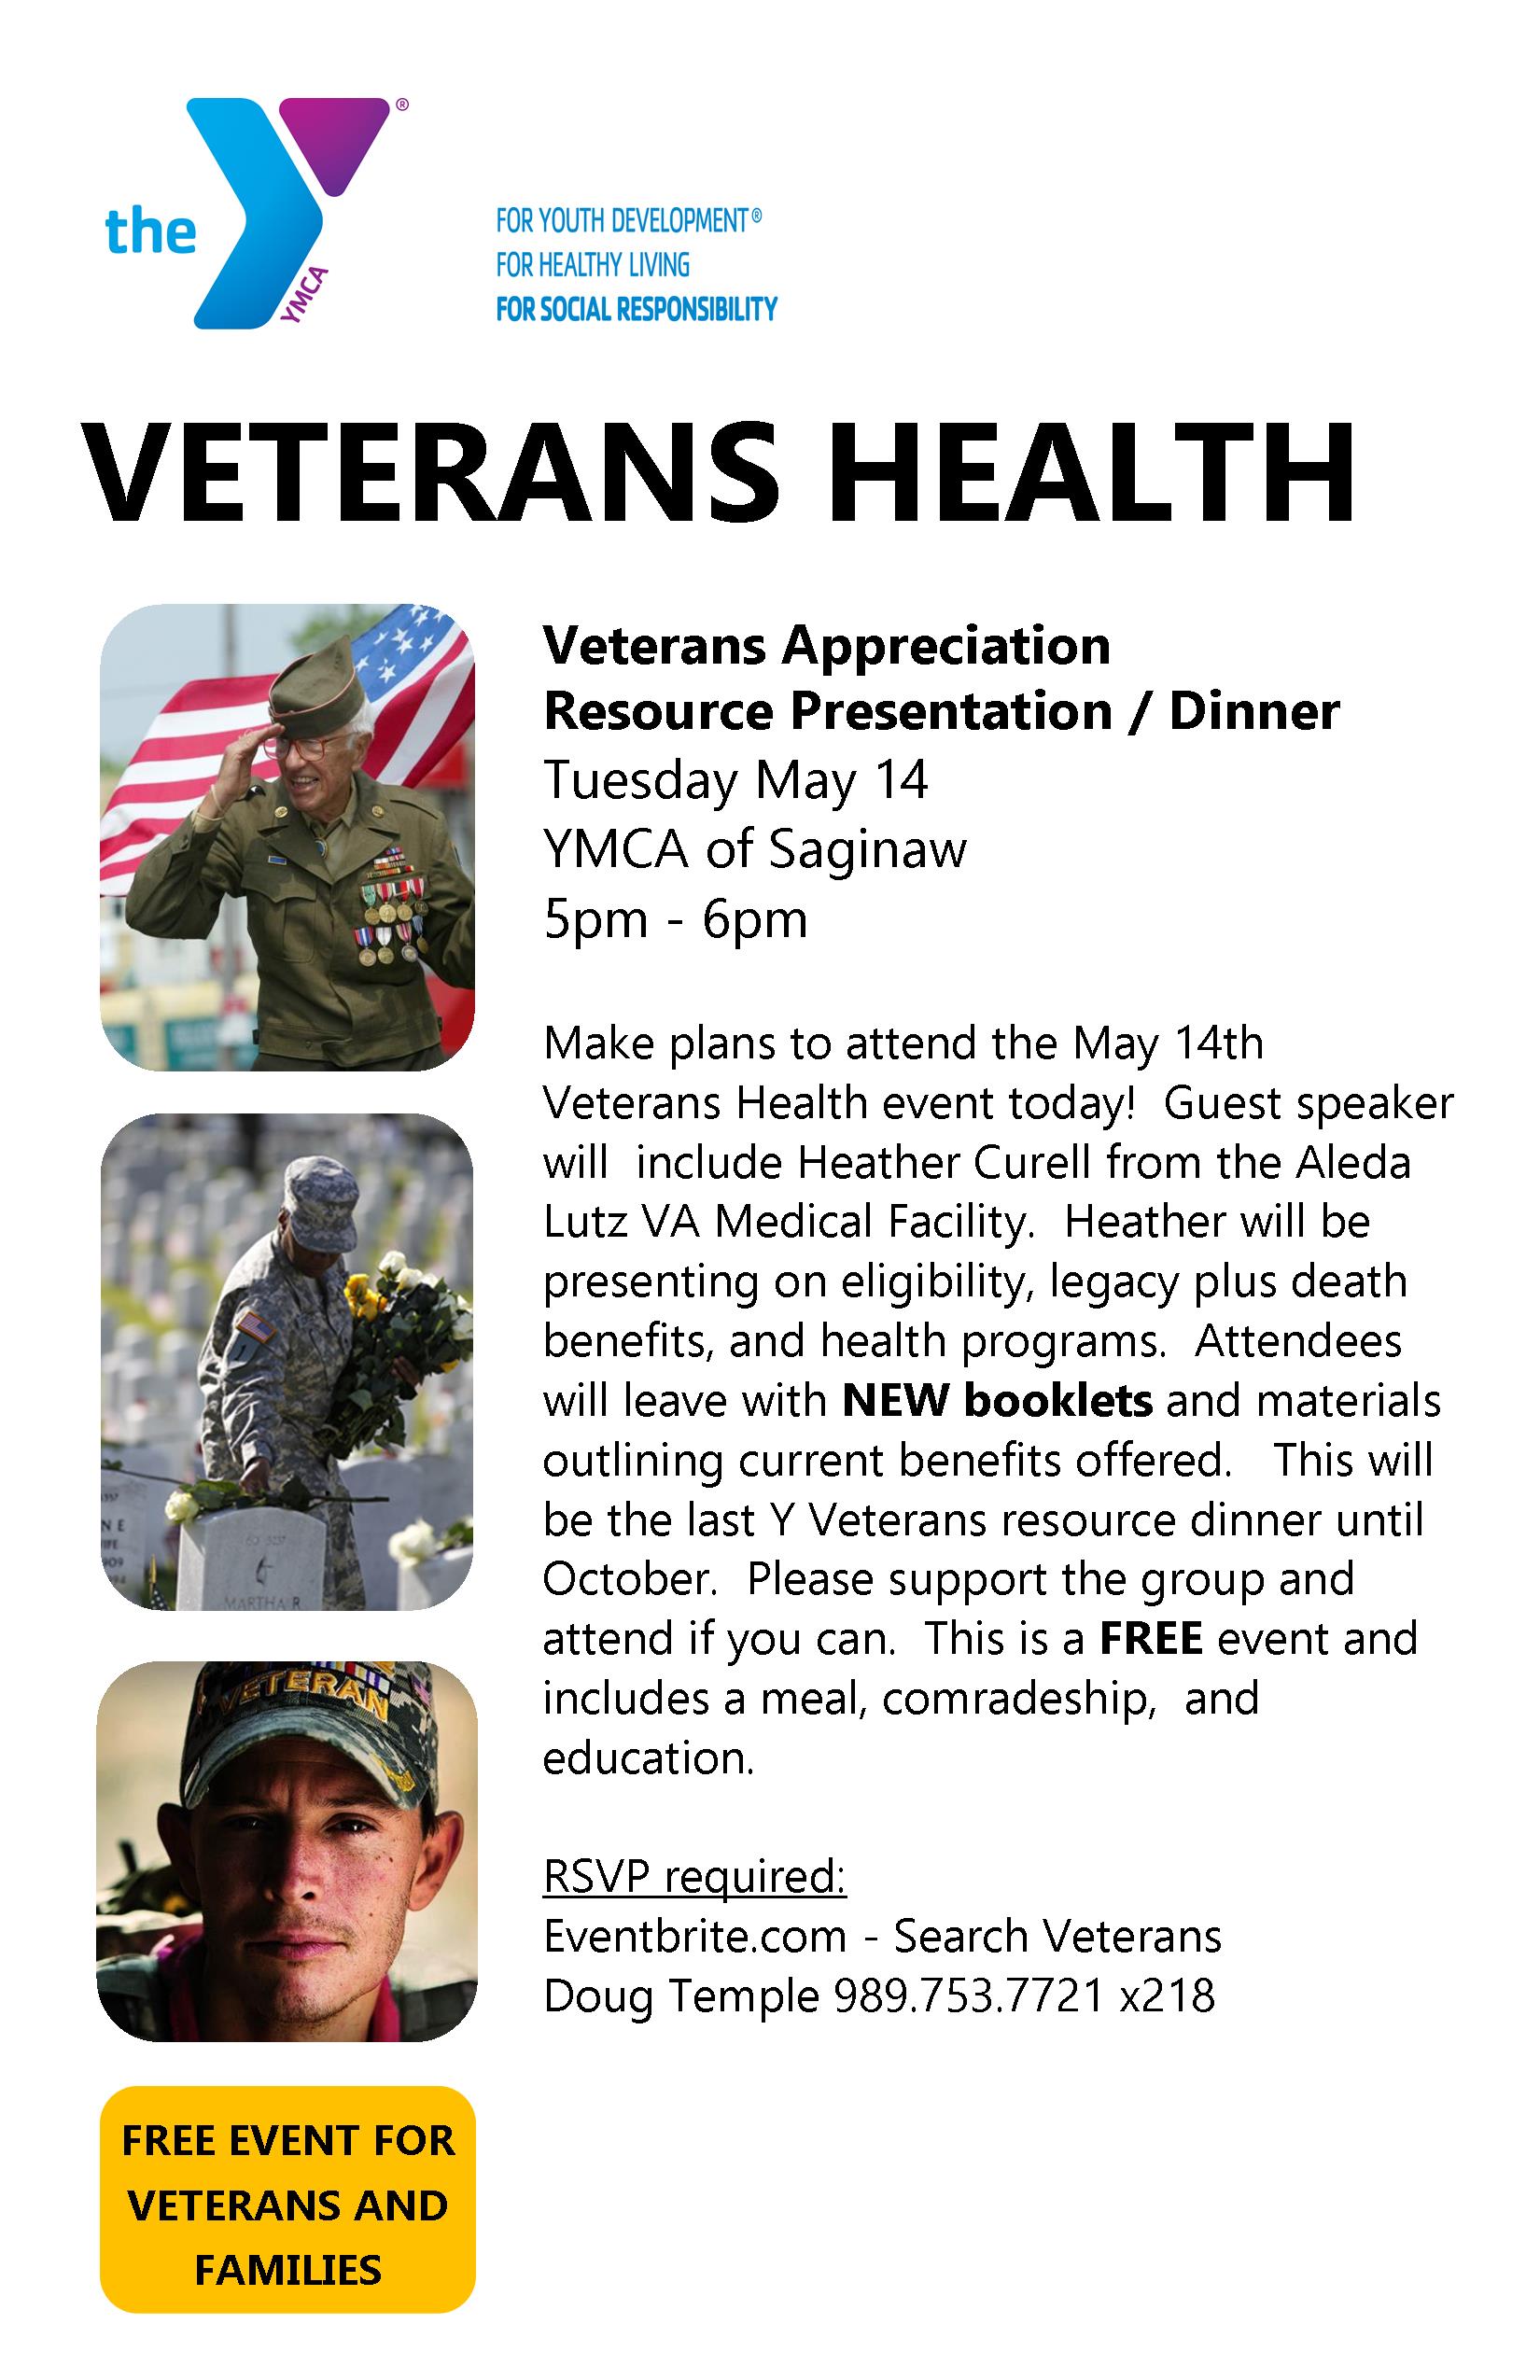 YMCA of Saginaw May 14 Veterans Appreciation Event